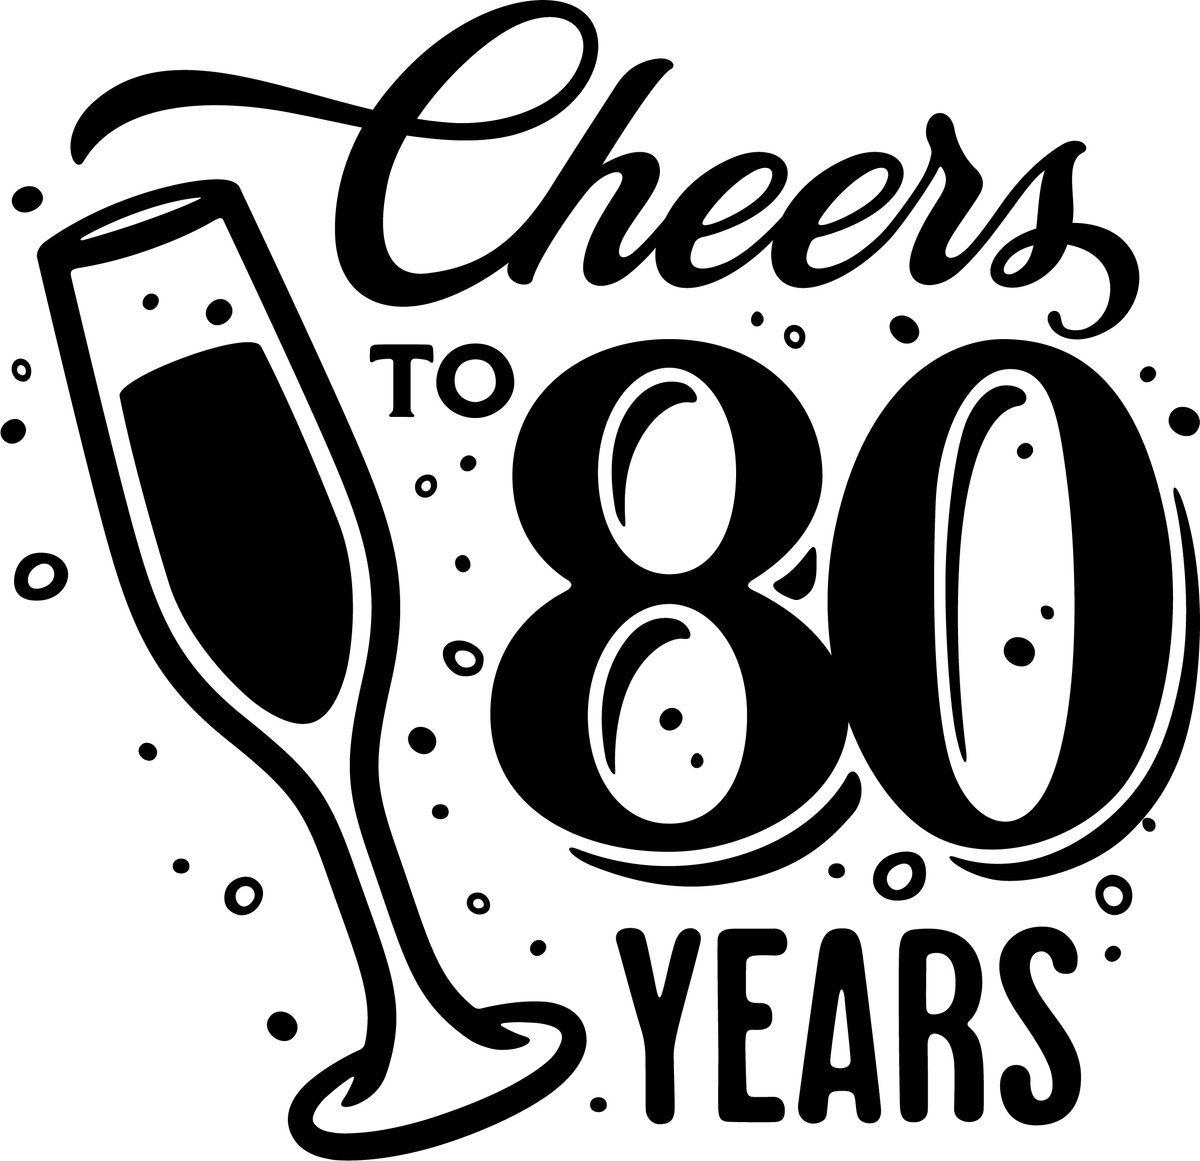 Sticker - Cheers to 80 years - 20x20cm - wit - 1 stuks - stickers - verjaardag - verjaardag decoratie - verjaardag versiering - feest - feest versiering - feestartikelen - raamstickers - raamsticker - Stickers volwassenen